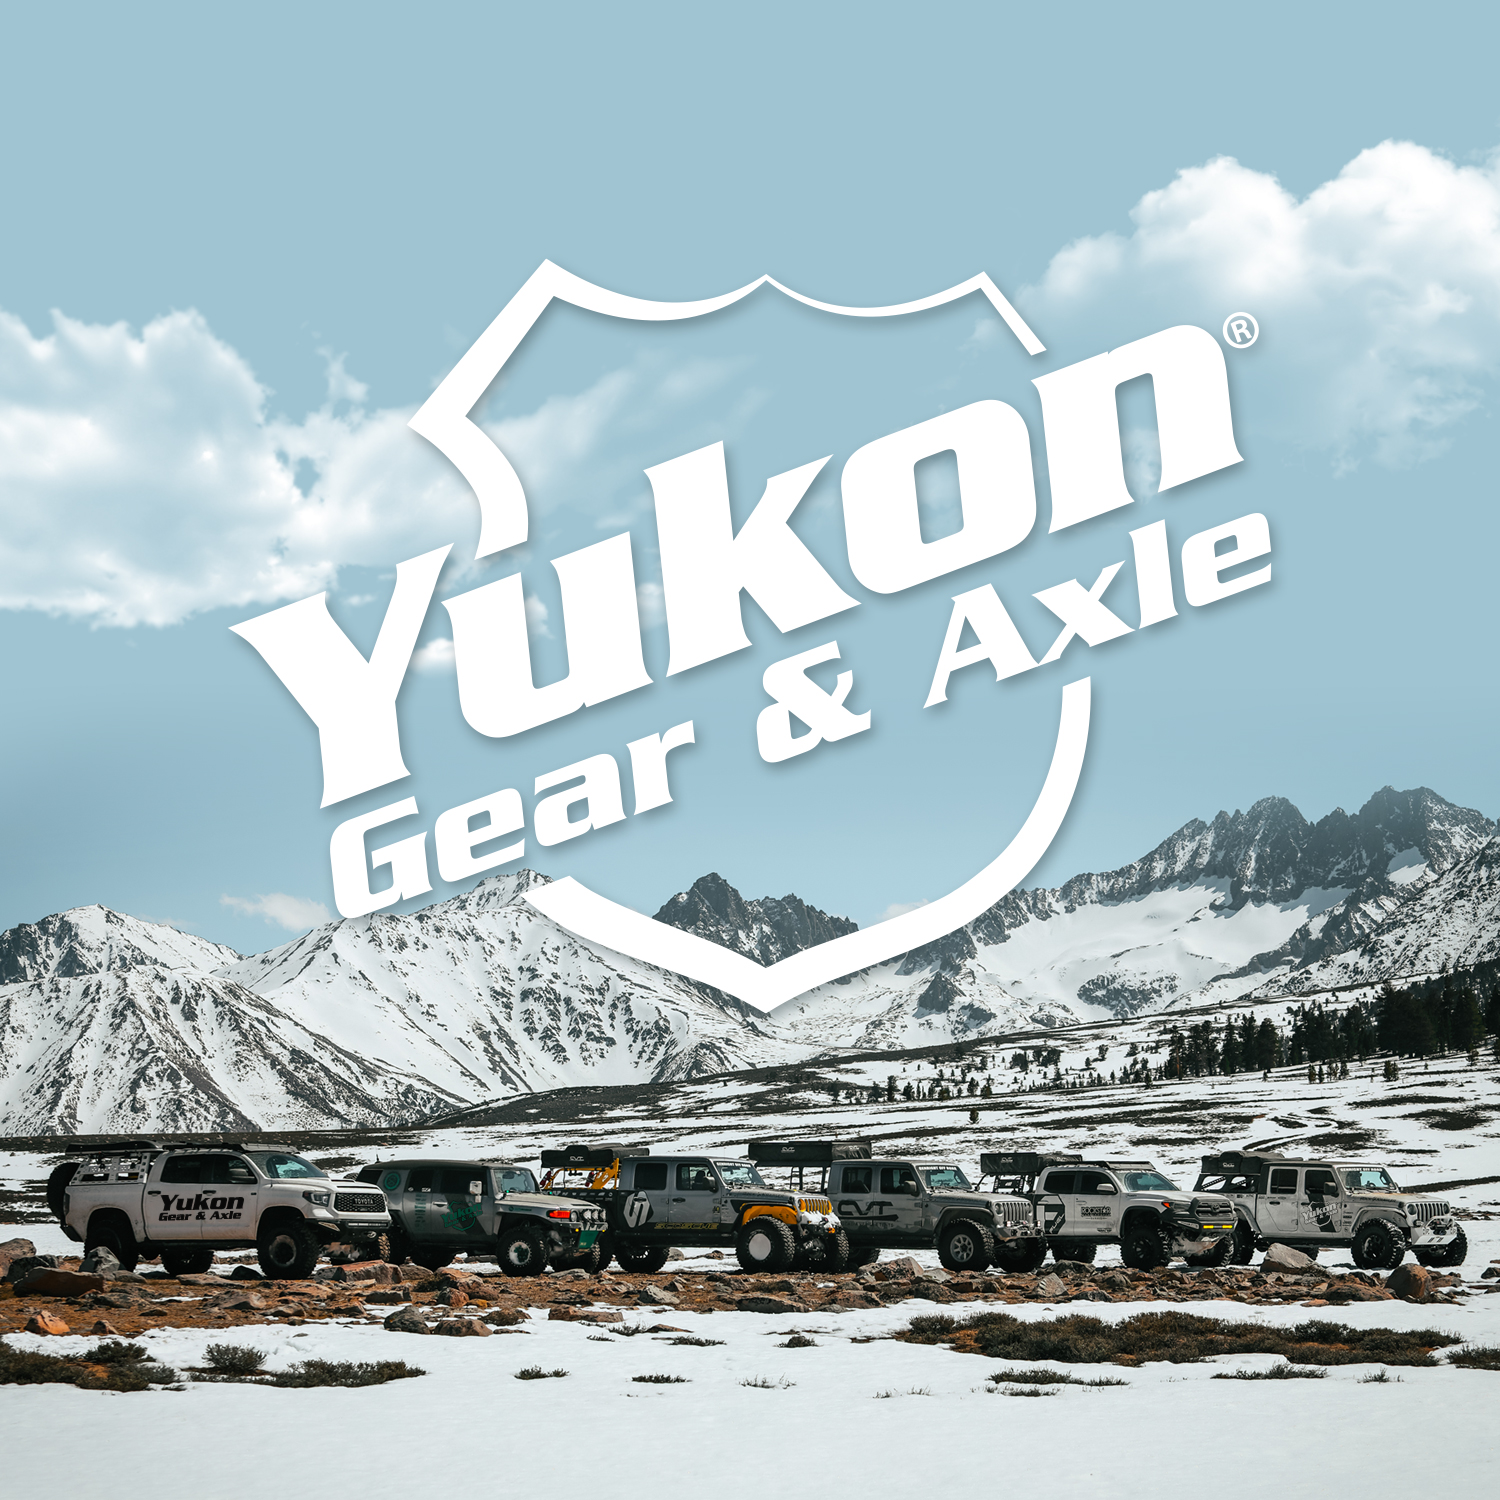 Yukon high performance replacement ring & pinion set, Dana M300, 4.10 ratio 